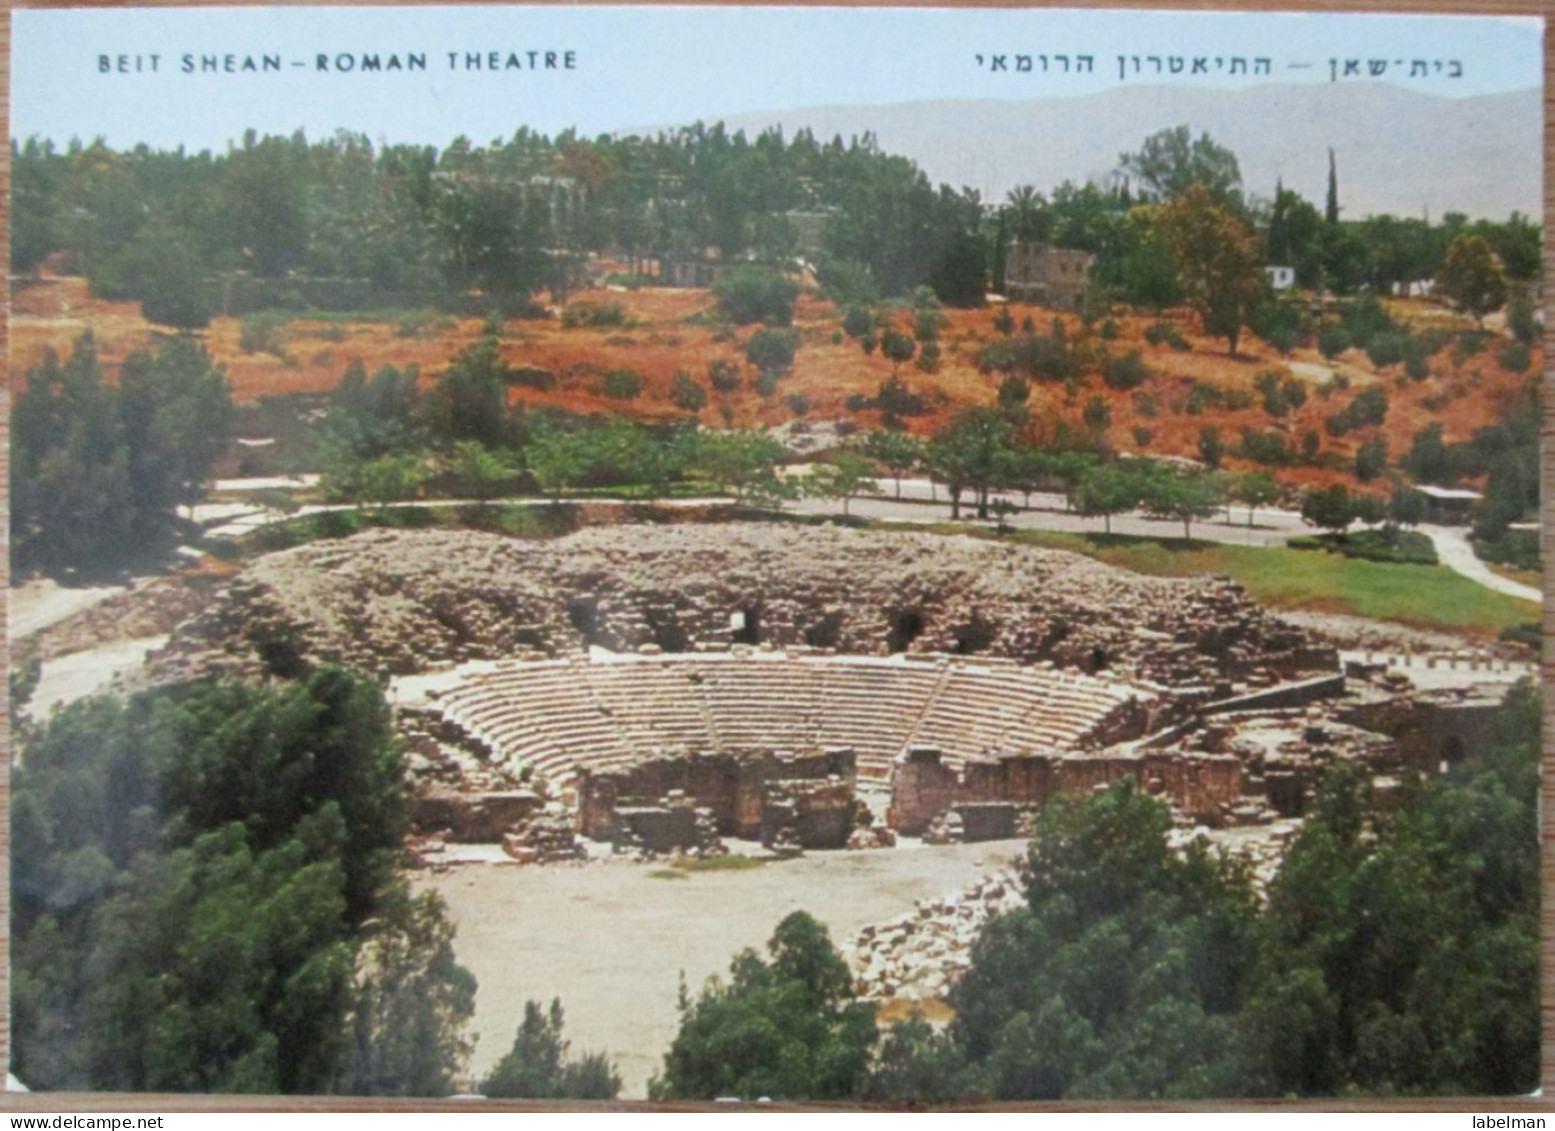 ROMAN THEATRE BEIT SHEAAN CARTE POSTALE POSTCARD ISRAEL KARTE ANSICHTKARTE SOUVENIR POST CARD PHOTO STAMP CACHET - Israel